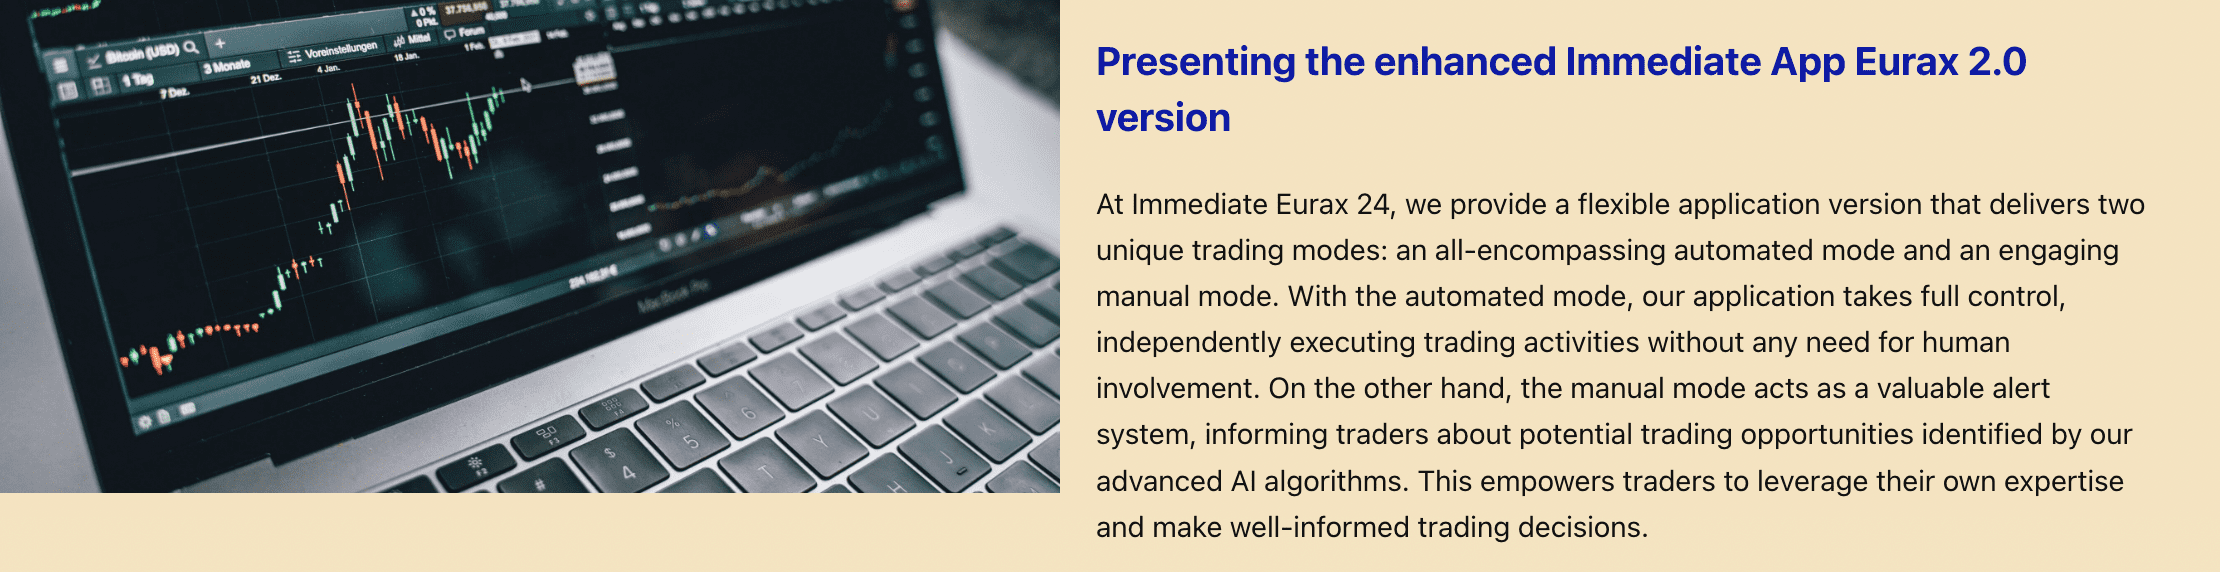 Immediate Eurax 1.0 new version